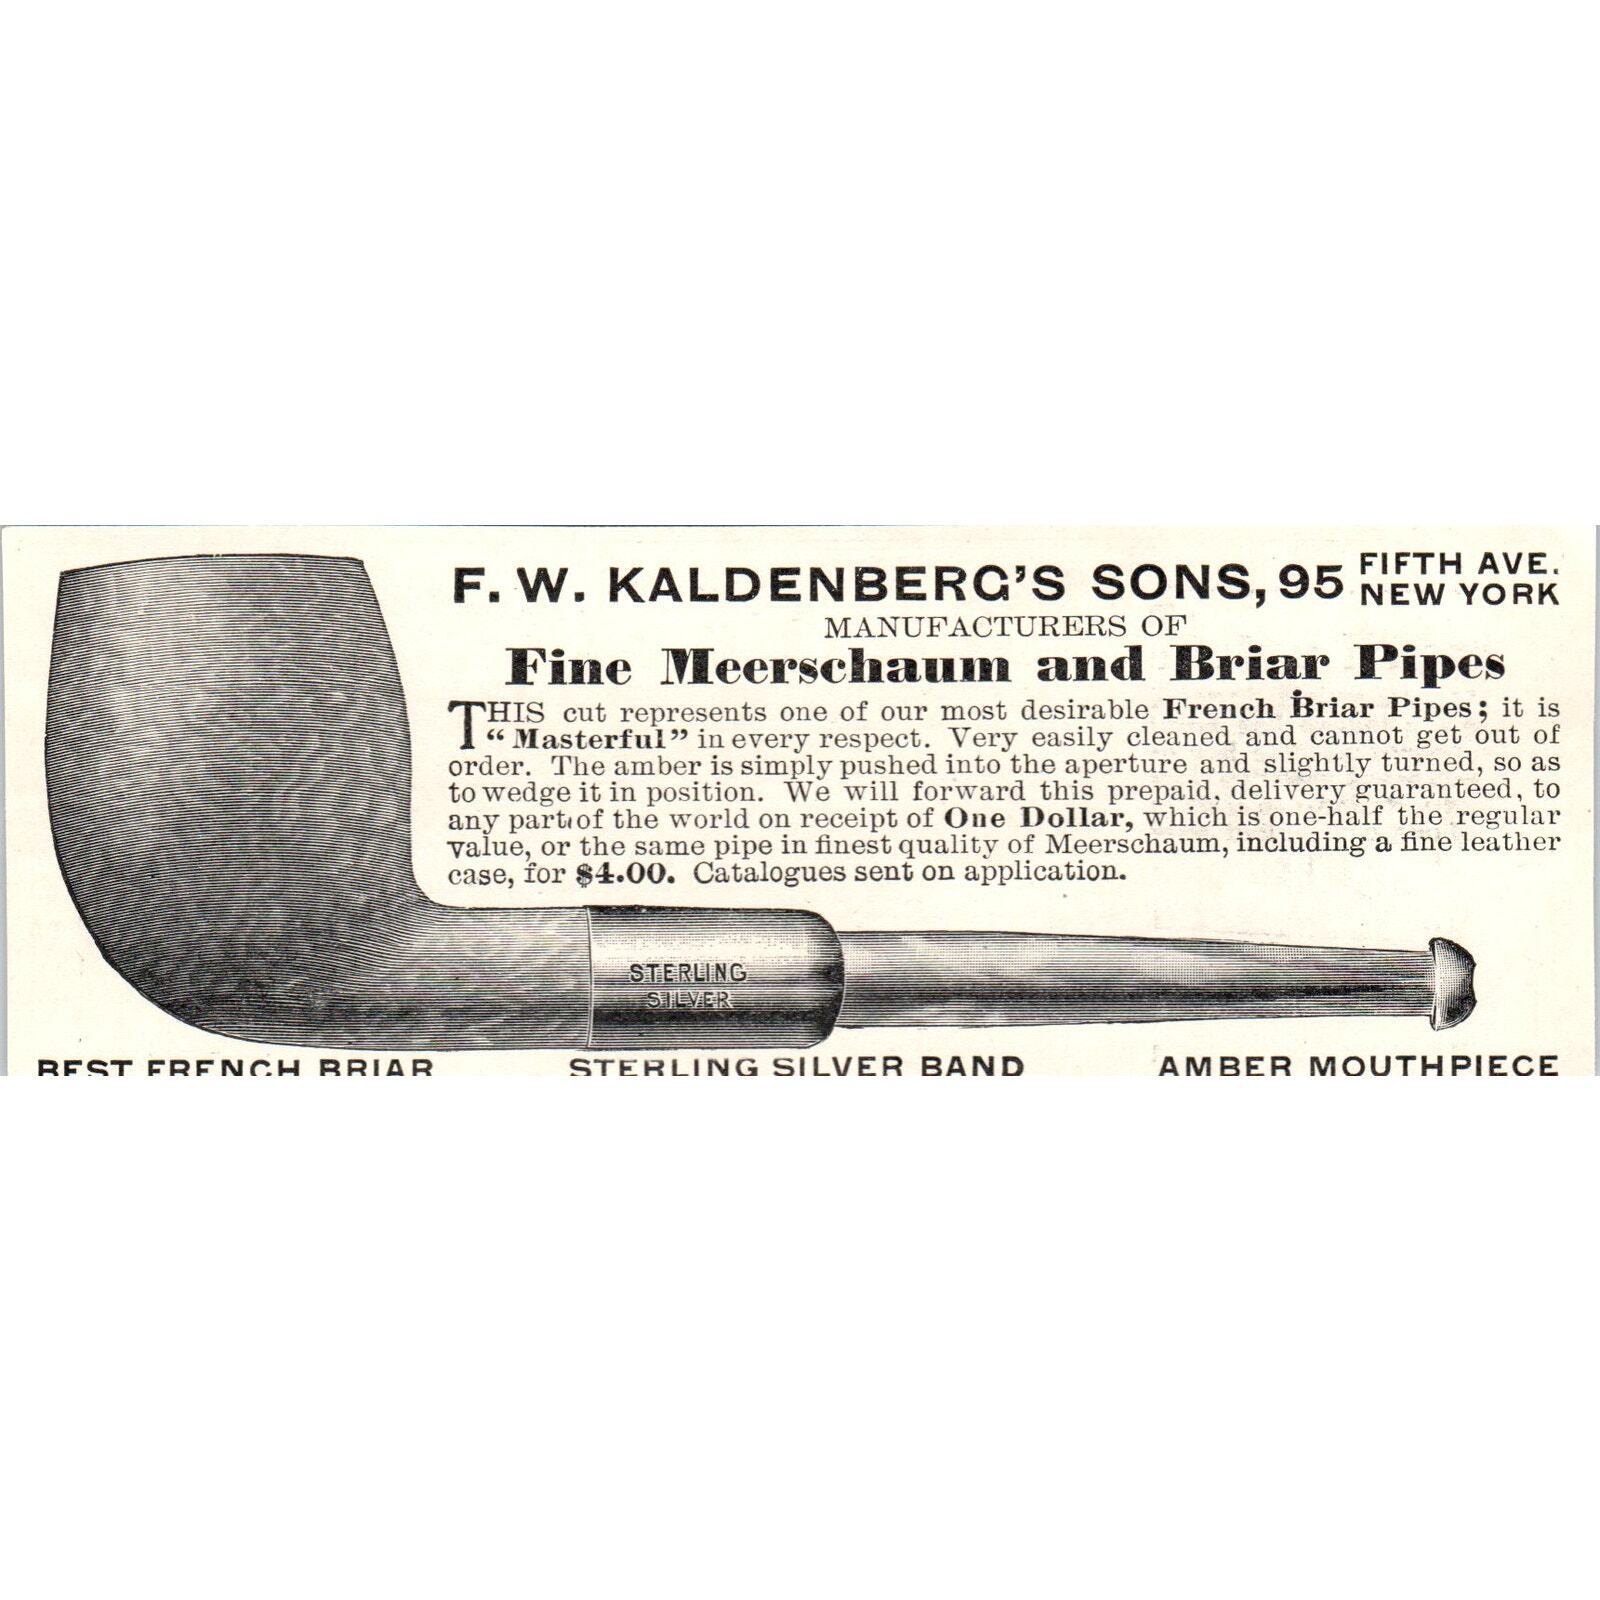 F.W. Kaldenberg's Sons Meerschaum & Briar Pipes NY c1905 Victorian Ad AF1-CM4